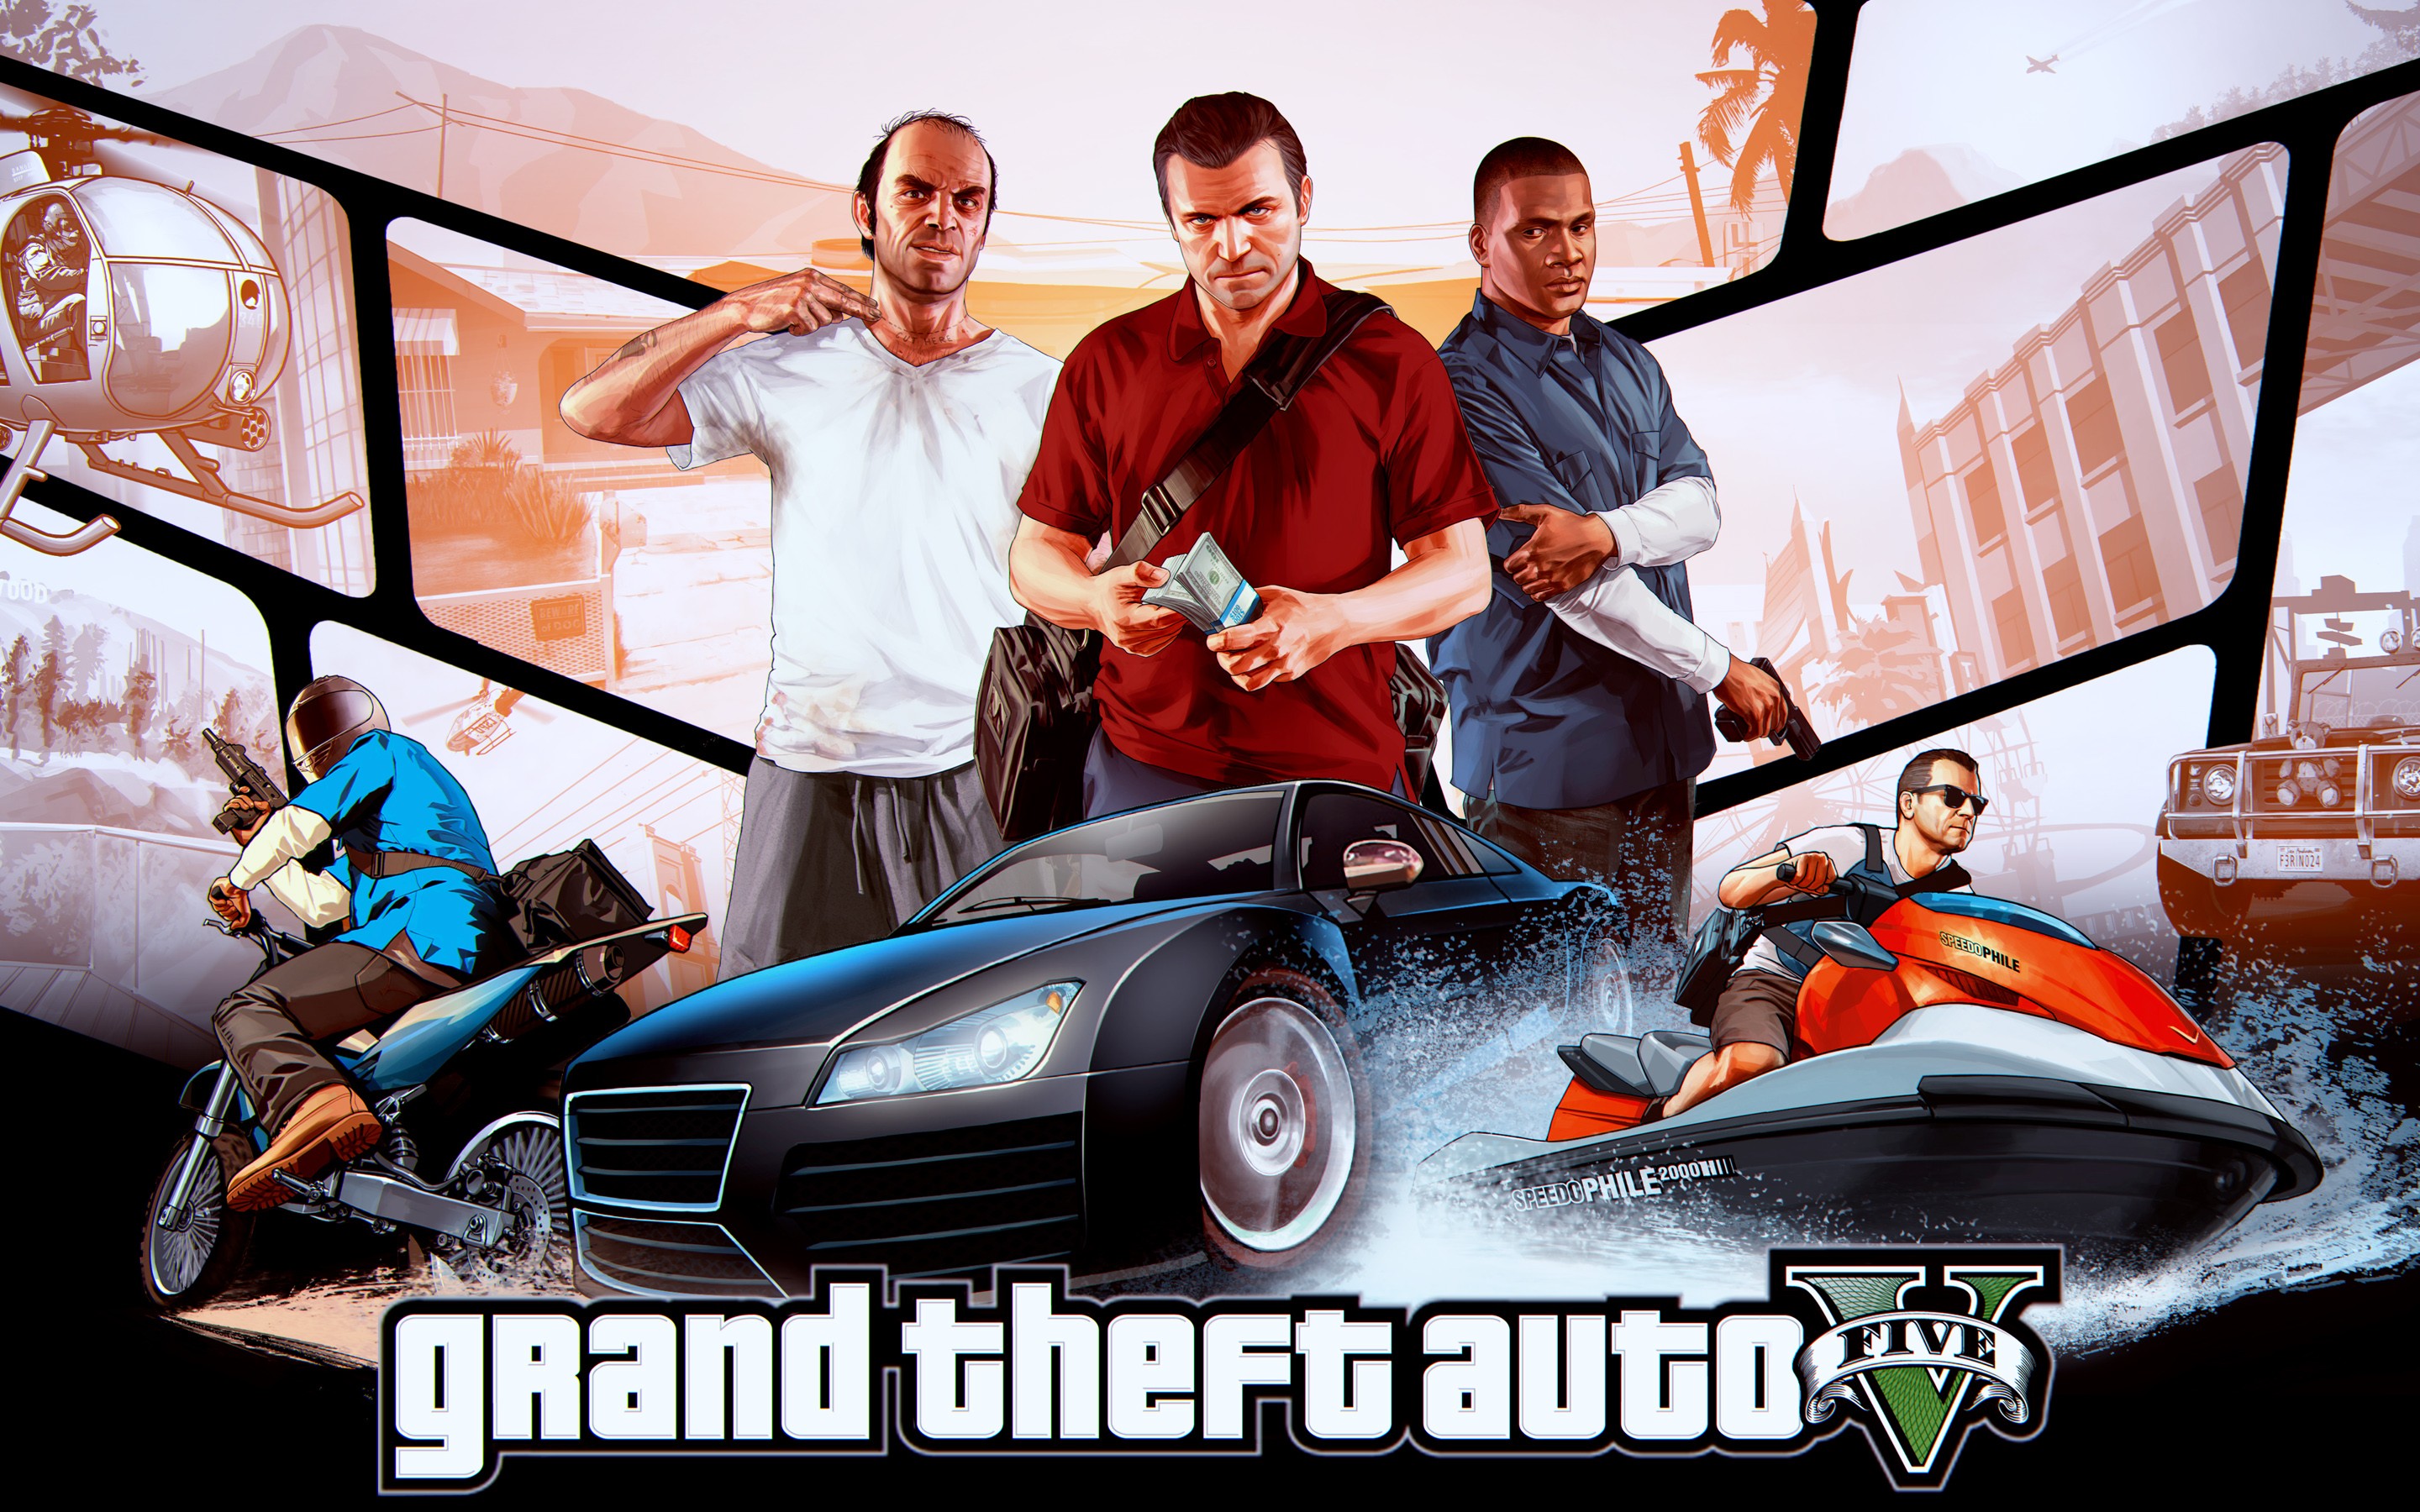 Grand Theft Auto V Game HD Wallpaper New